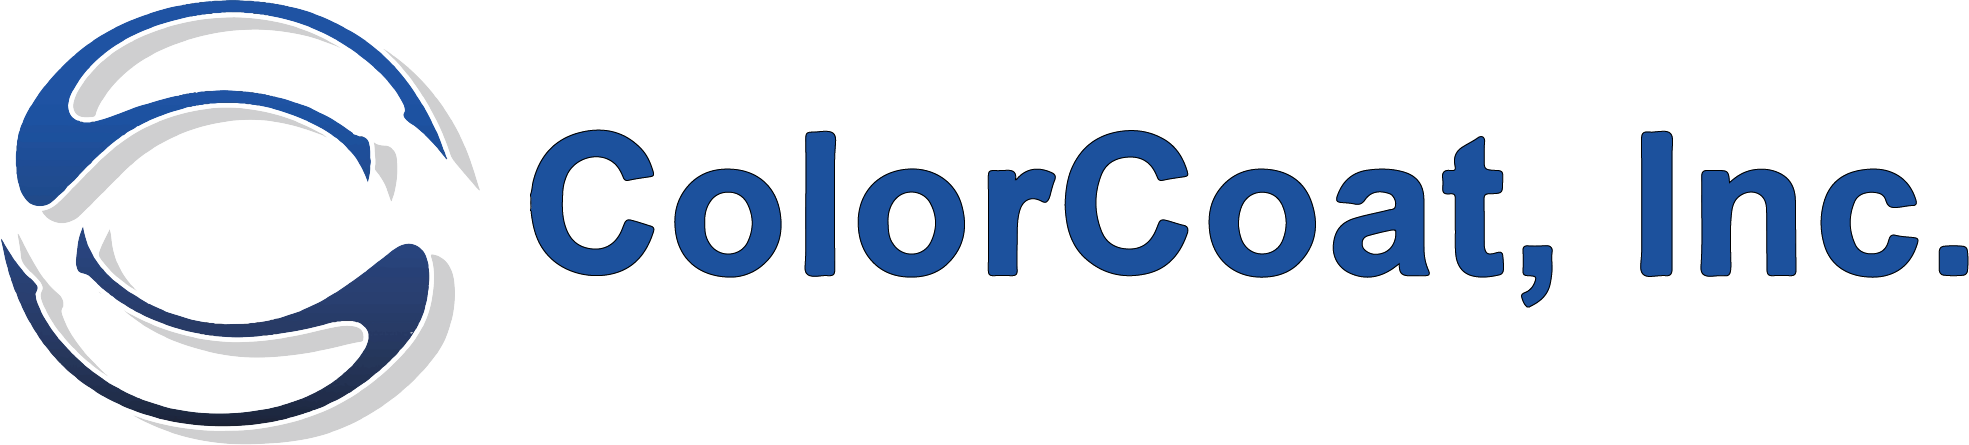 ColorCoat, Inc.